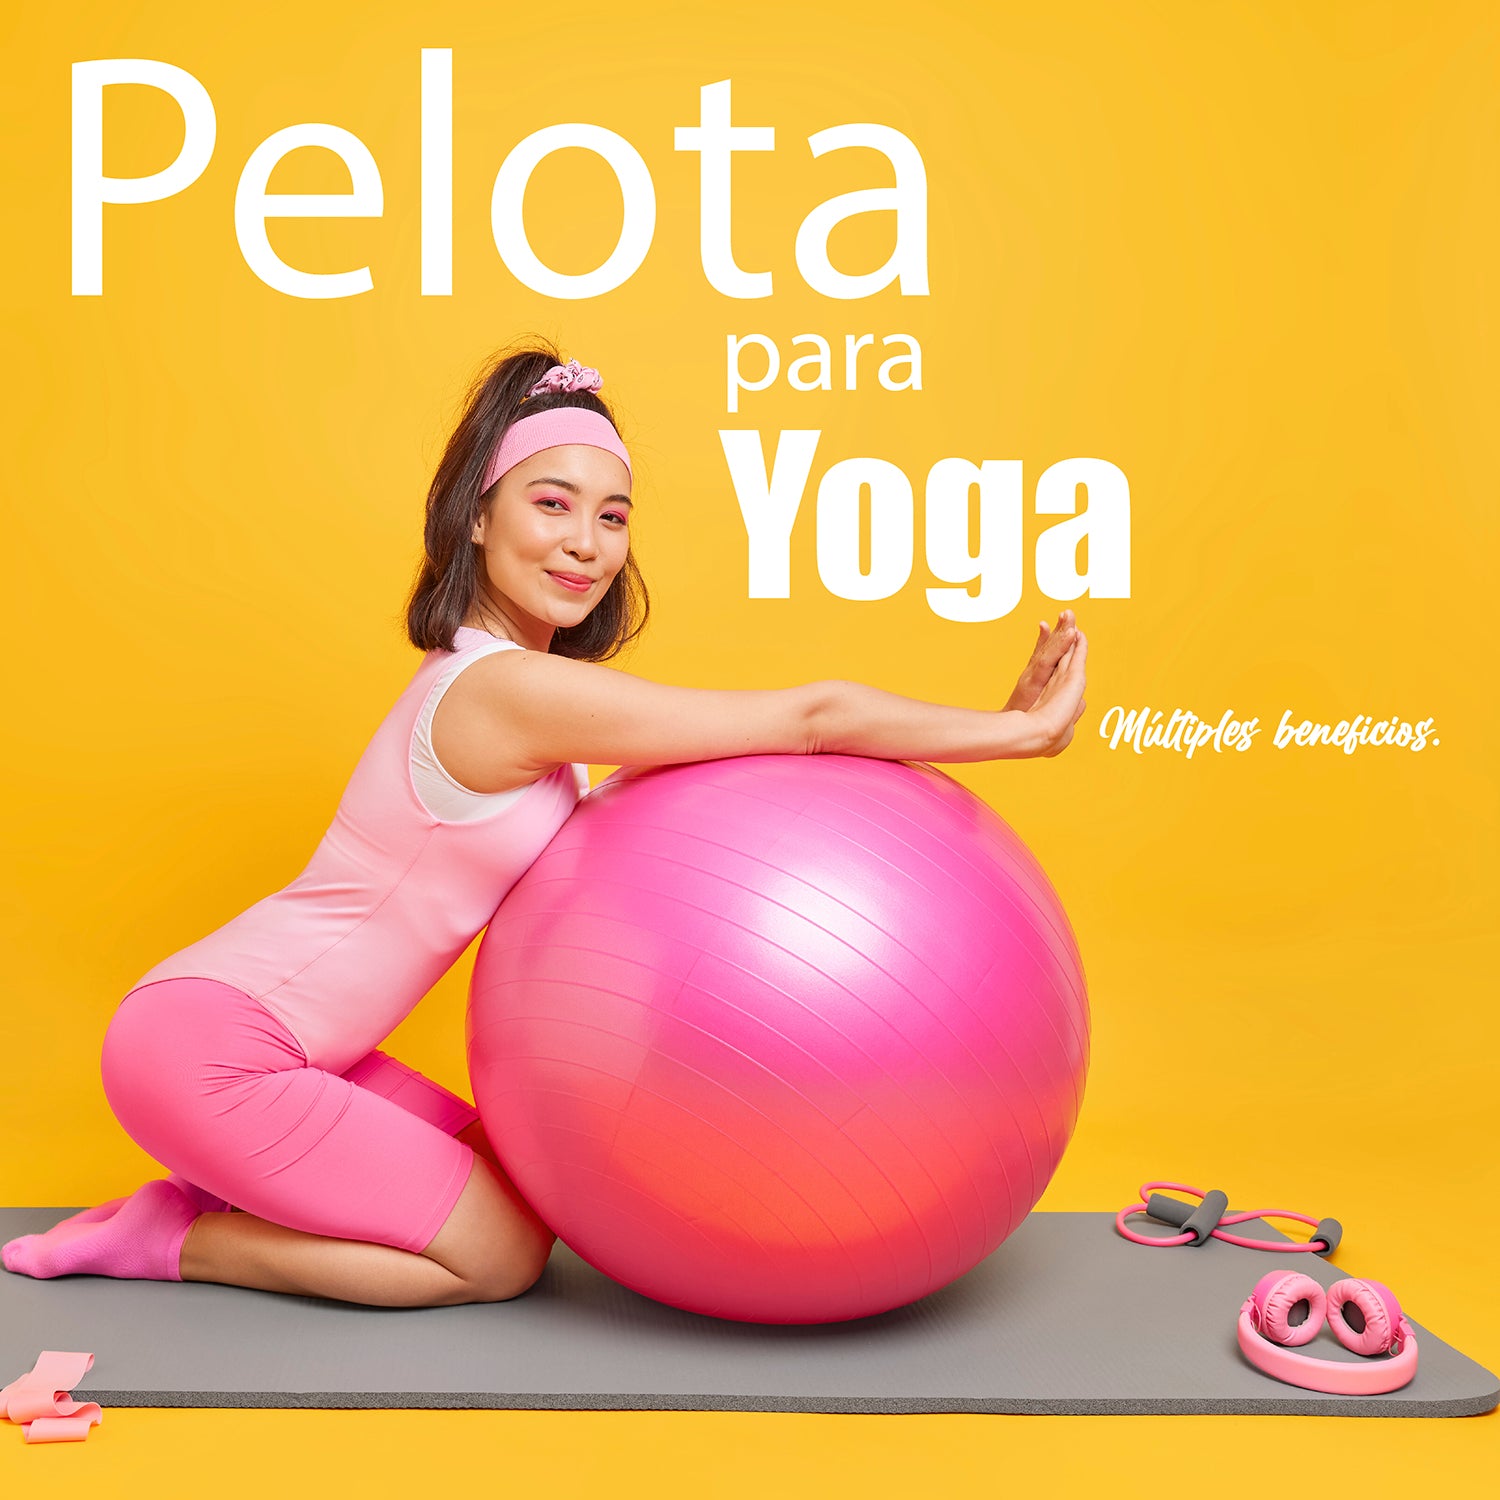 Love & Peace pink - Camiseta de yoga mujer - Jaspeado – YogiCompany